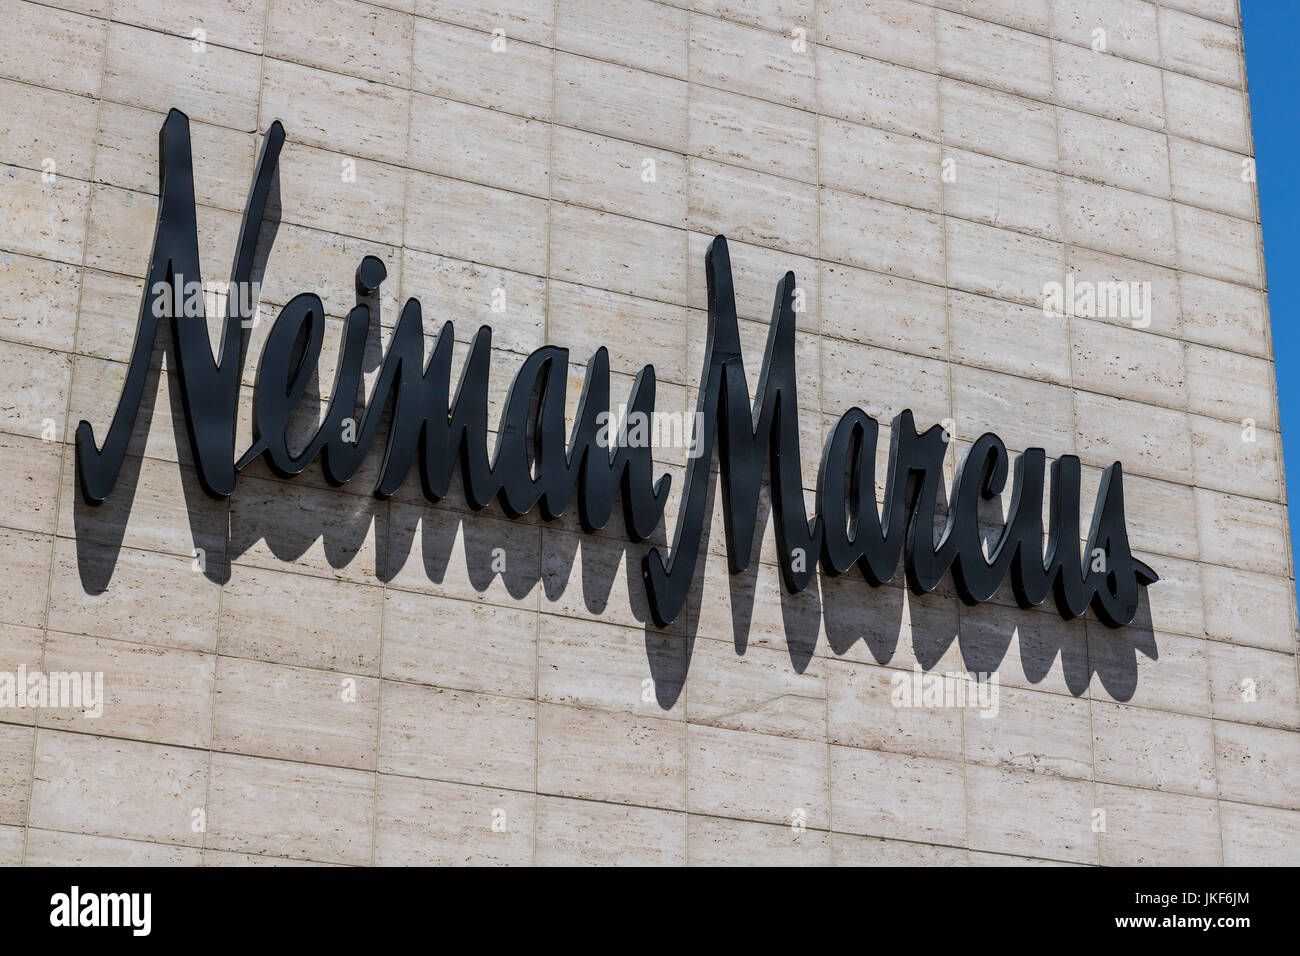 Neiman Marcus Store Las Vegas Stock Photo - Download Image Now